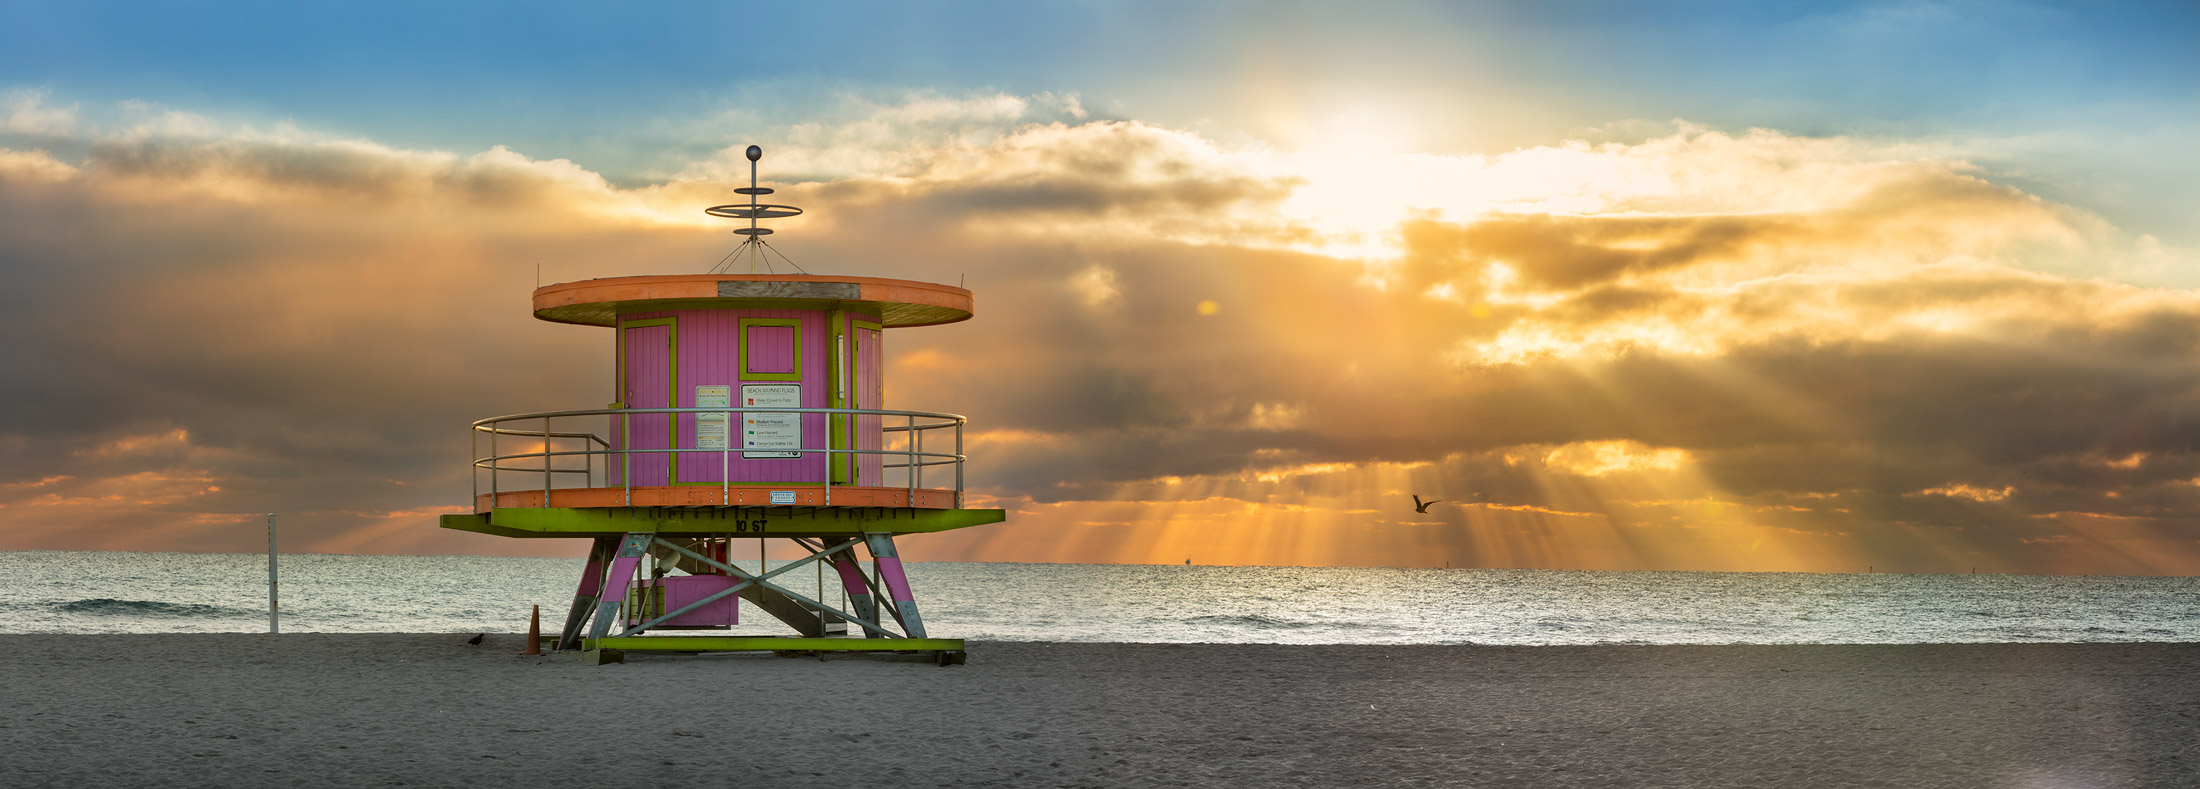 Miami Beach Lifeguard Stand Sunbeams